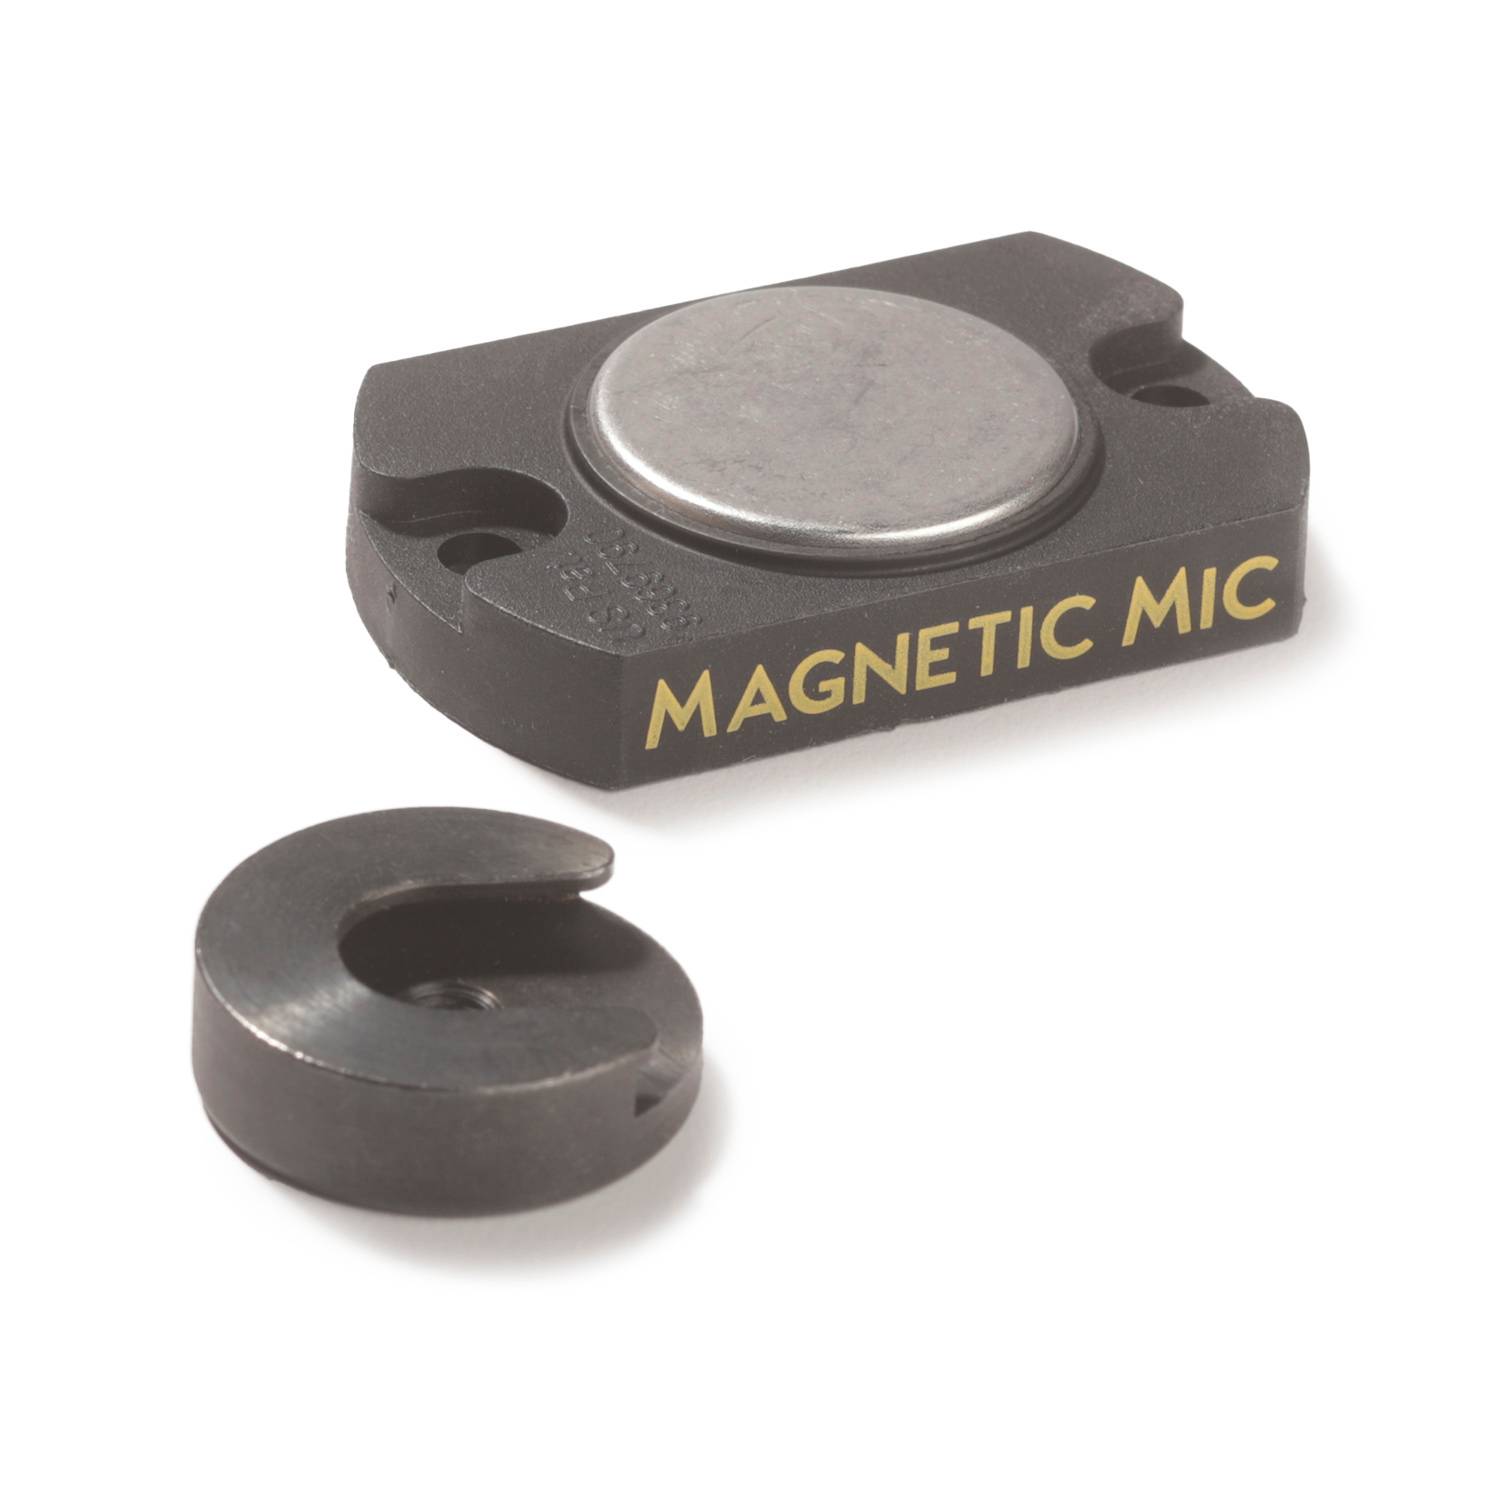 Jotto Desk Mic Magnet - Model 425-3816